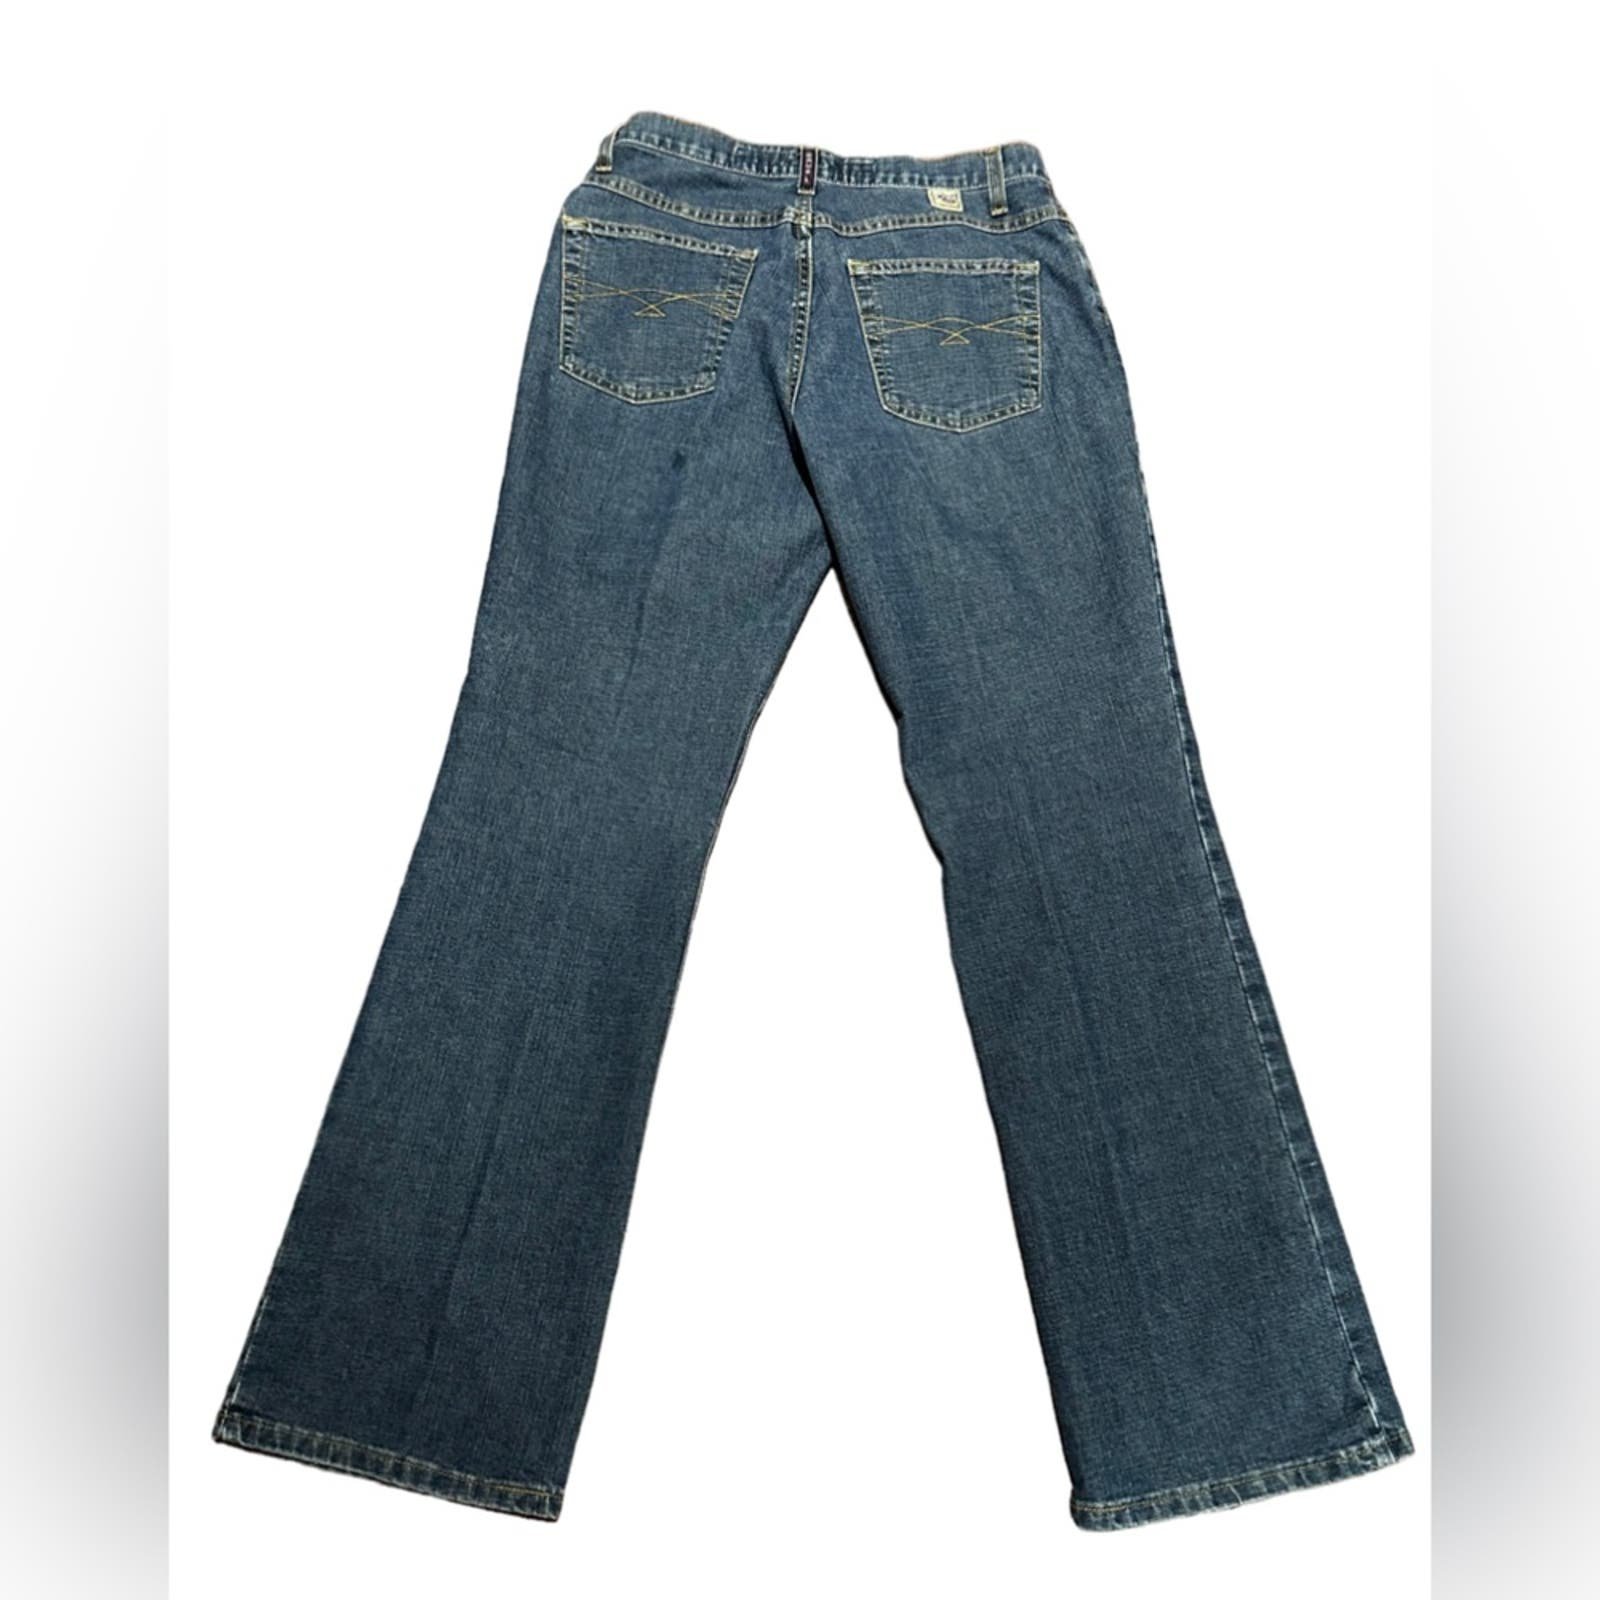 floor price Cruel Girl Womens 9 Regular Bootcut Jeans in a Cotton, Polyester, Elastin blend oXIxTCxY3 Cheap